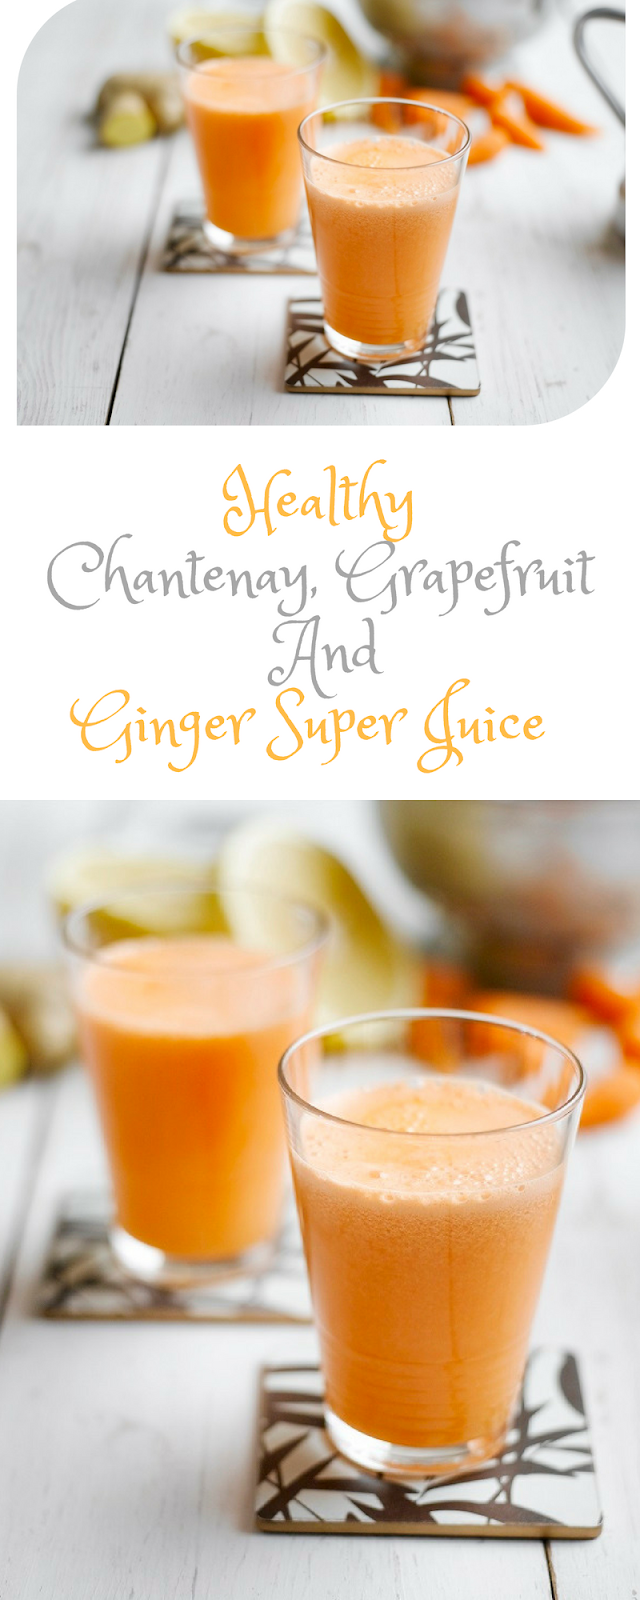 Healthy Chantenay, Grapefruit And Ginger Super Juice 